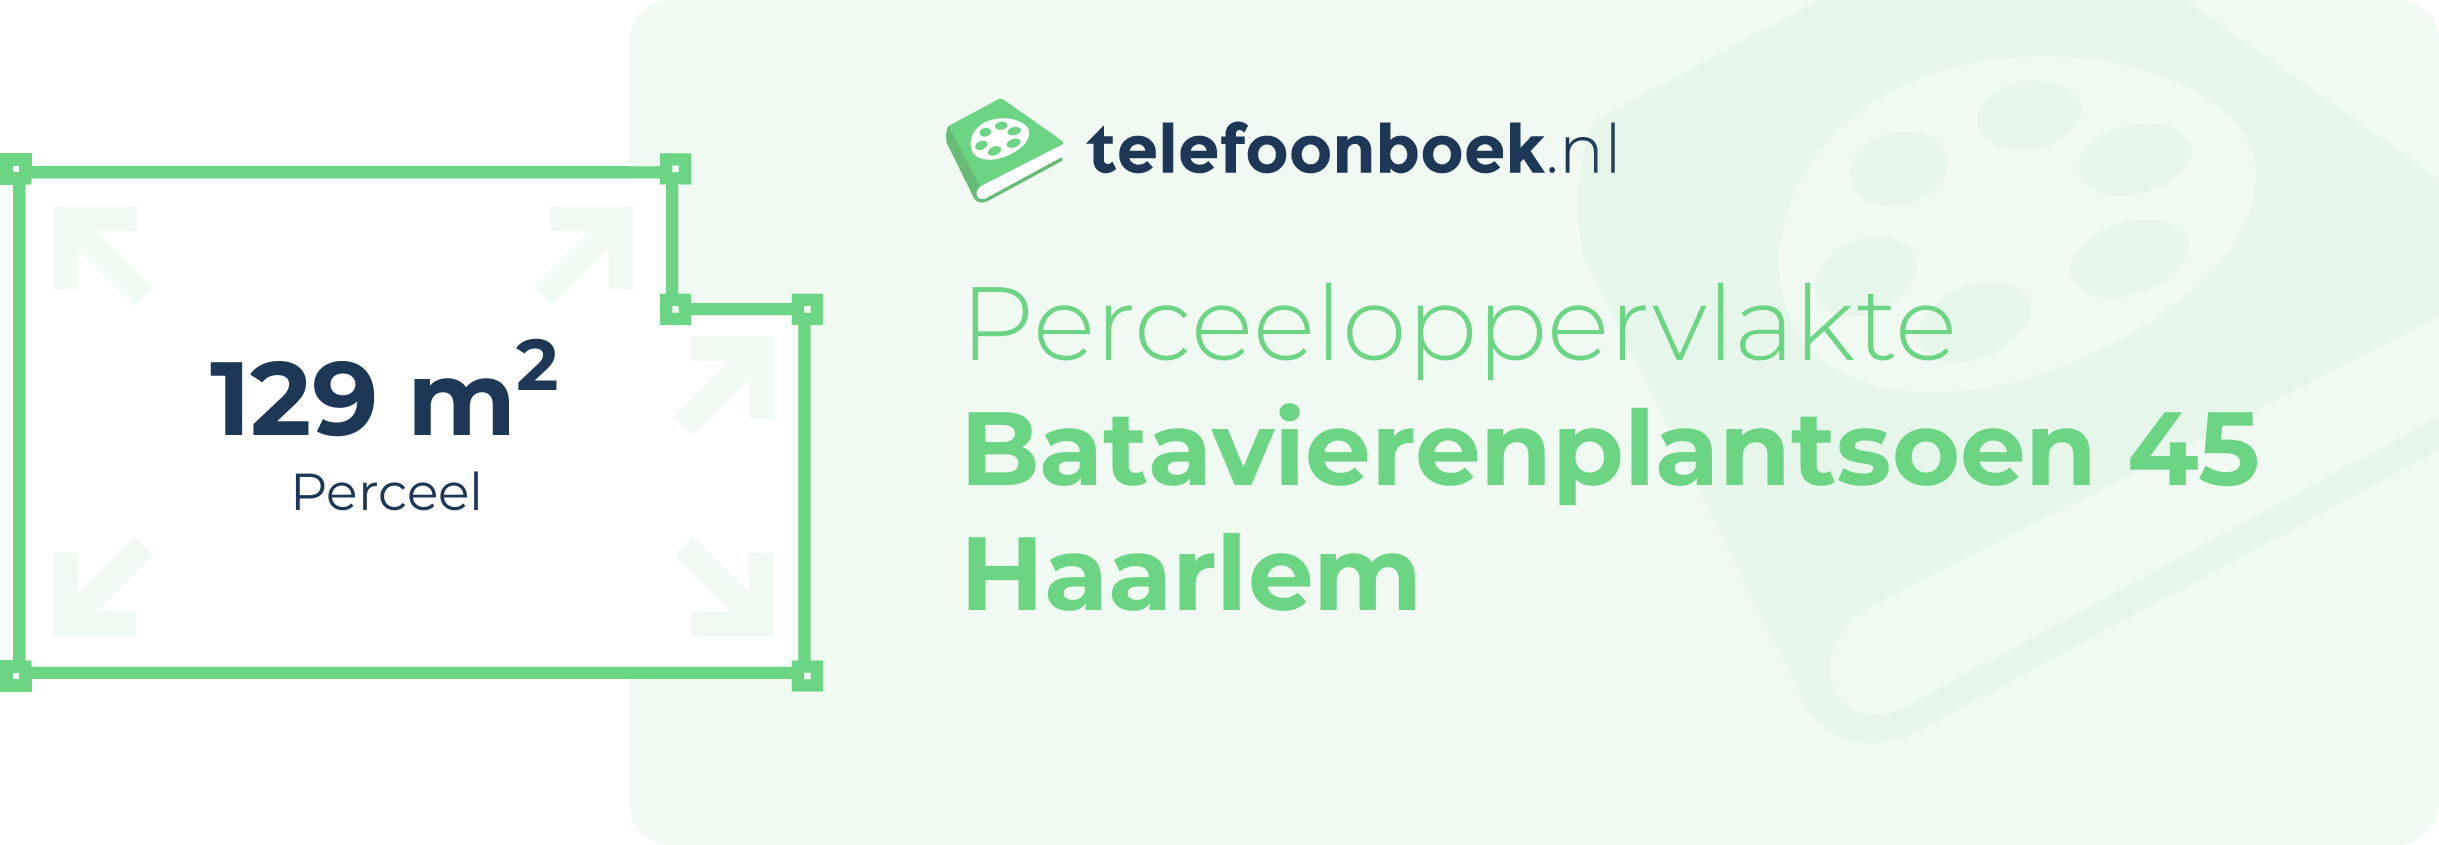 Perceeloppervlakte Batavierenplantsoen 45 Haarlem